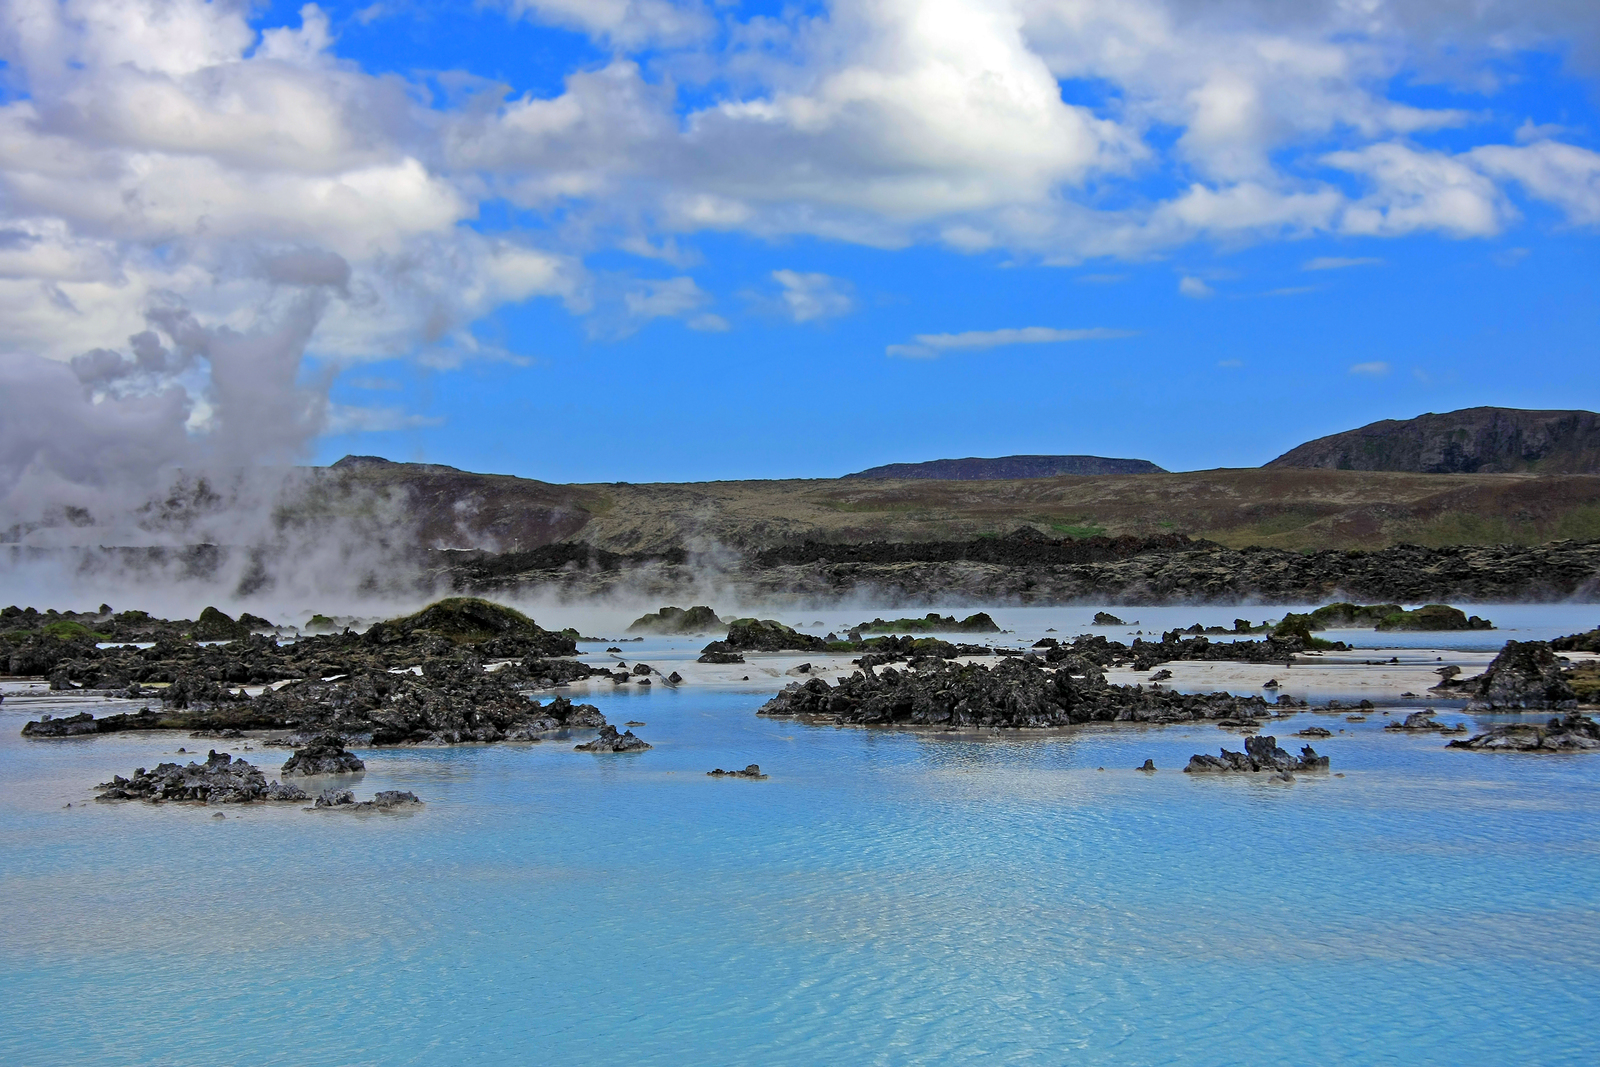 Blue lagoon, Iceland, a geothermal bath resort.